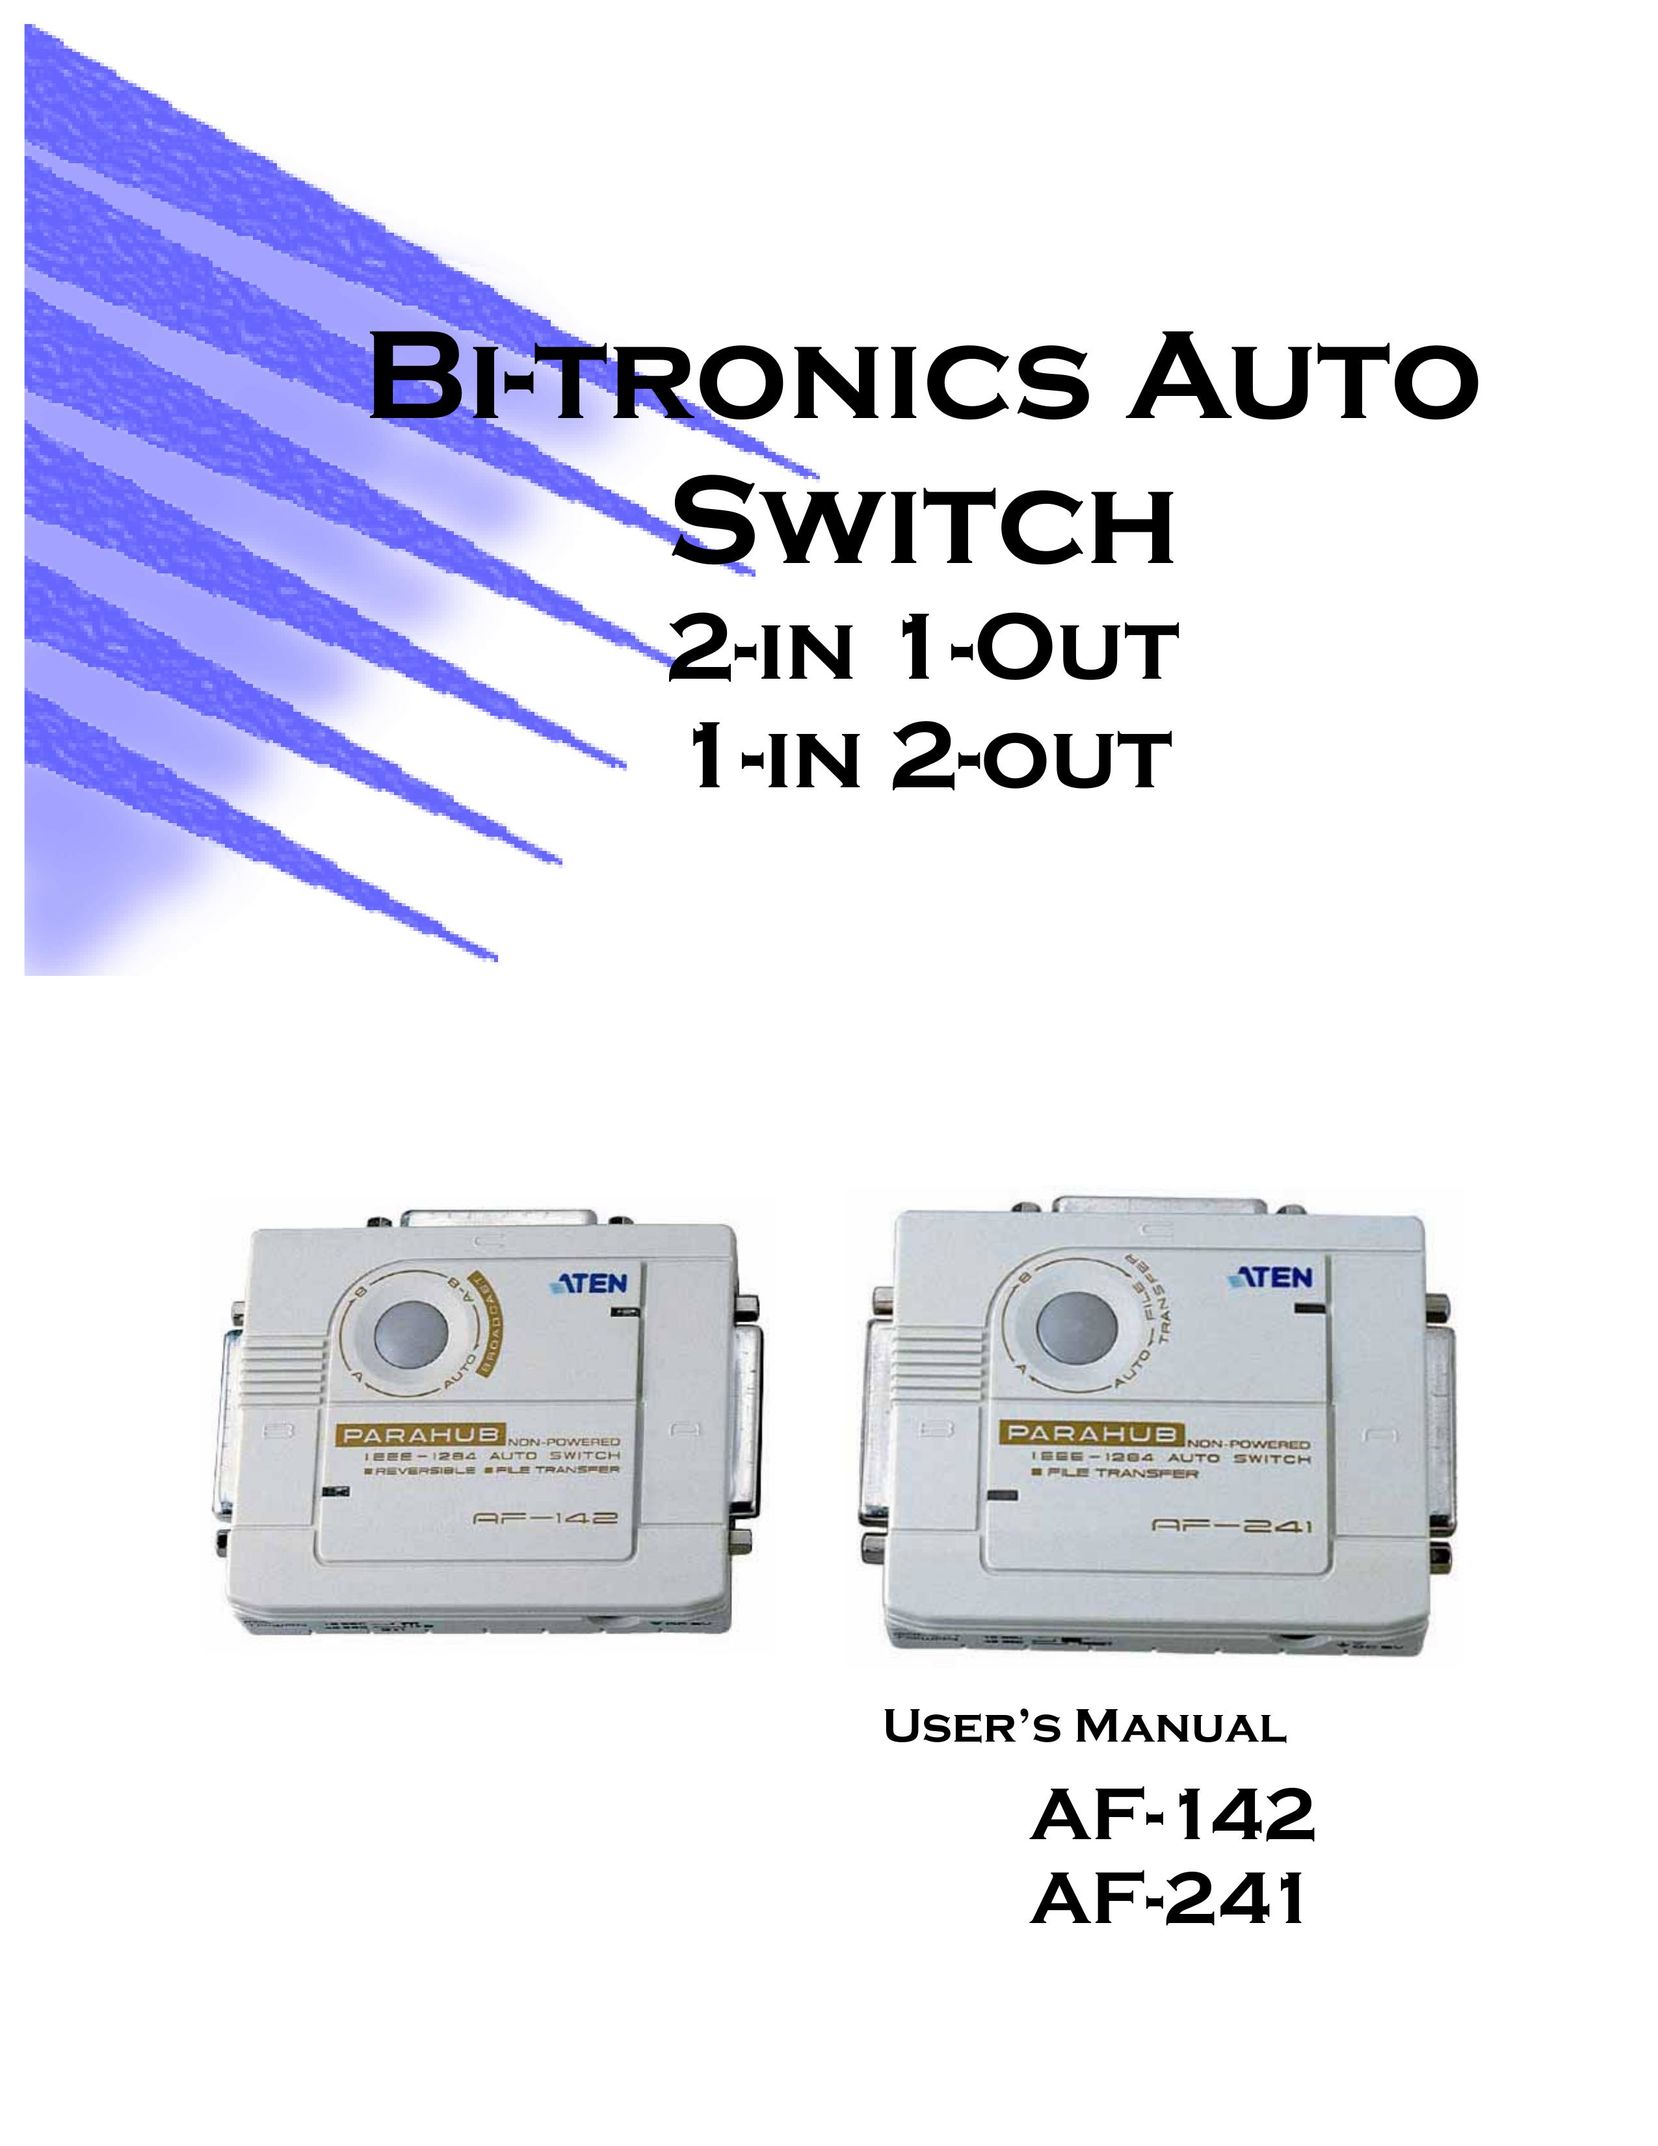 ATEN Technology Bi-tronics Auto Network Card User Manual (Page 1)